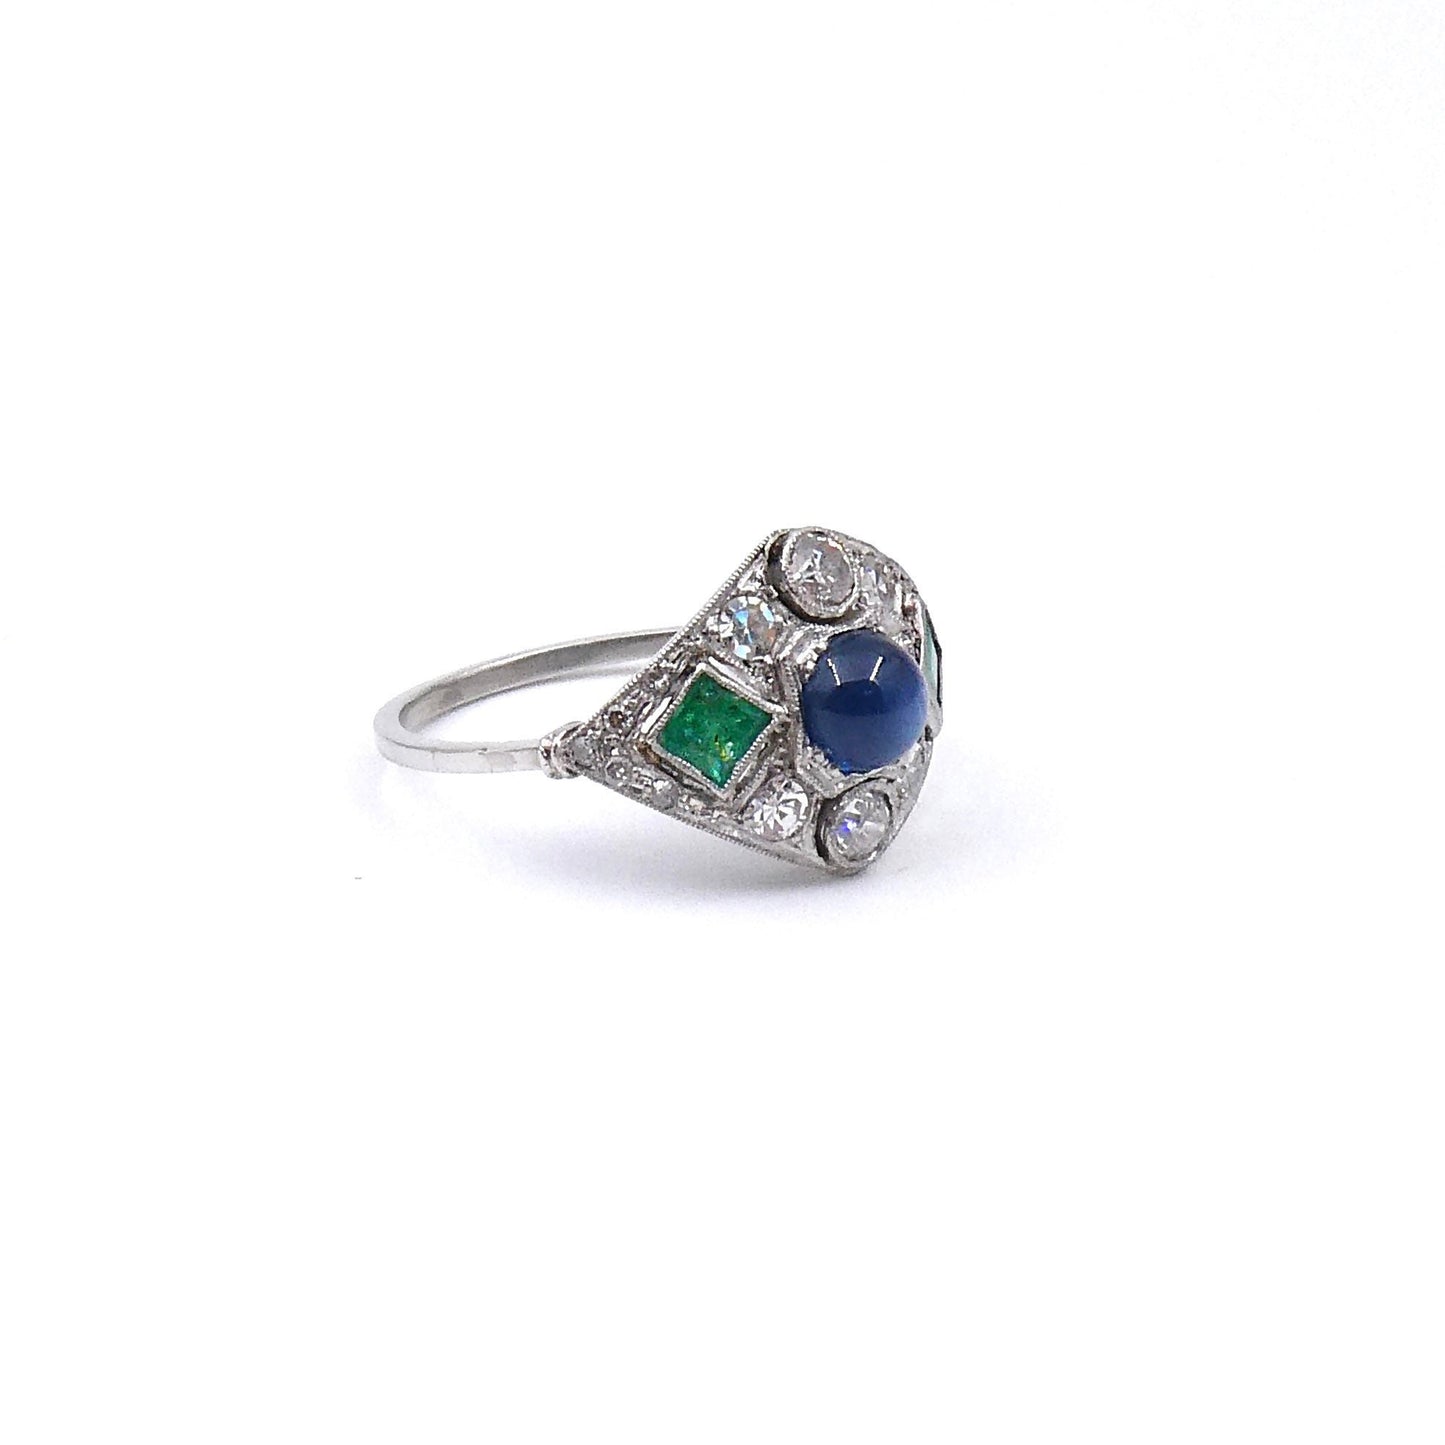 Antique sapphire emerald ring platinum set with diamonds, an Art Deco sapphire ring.